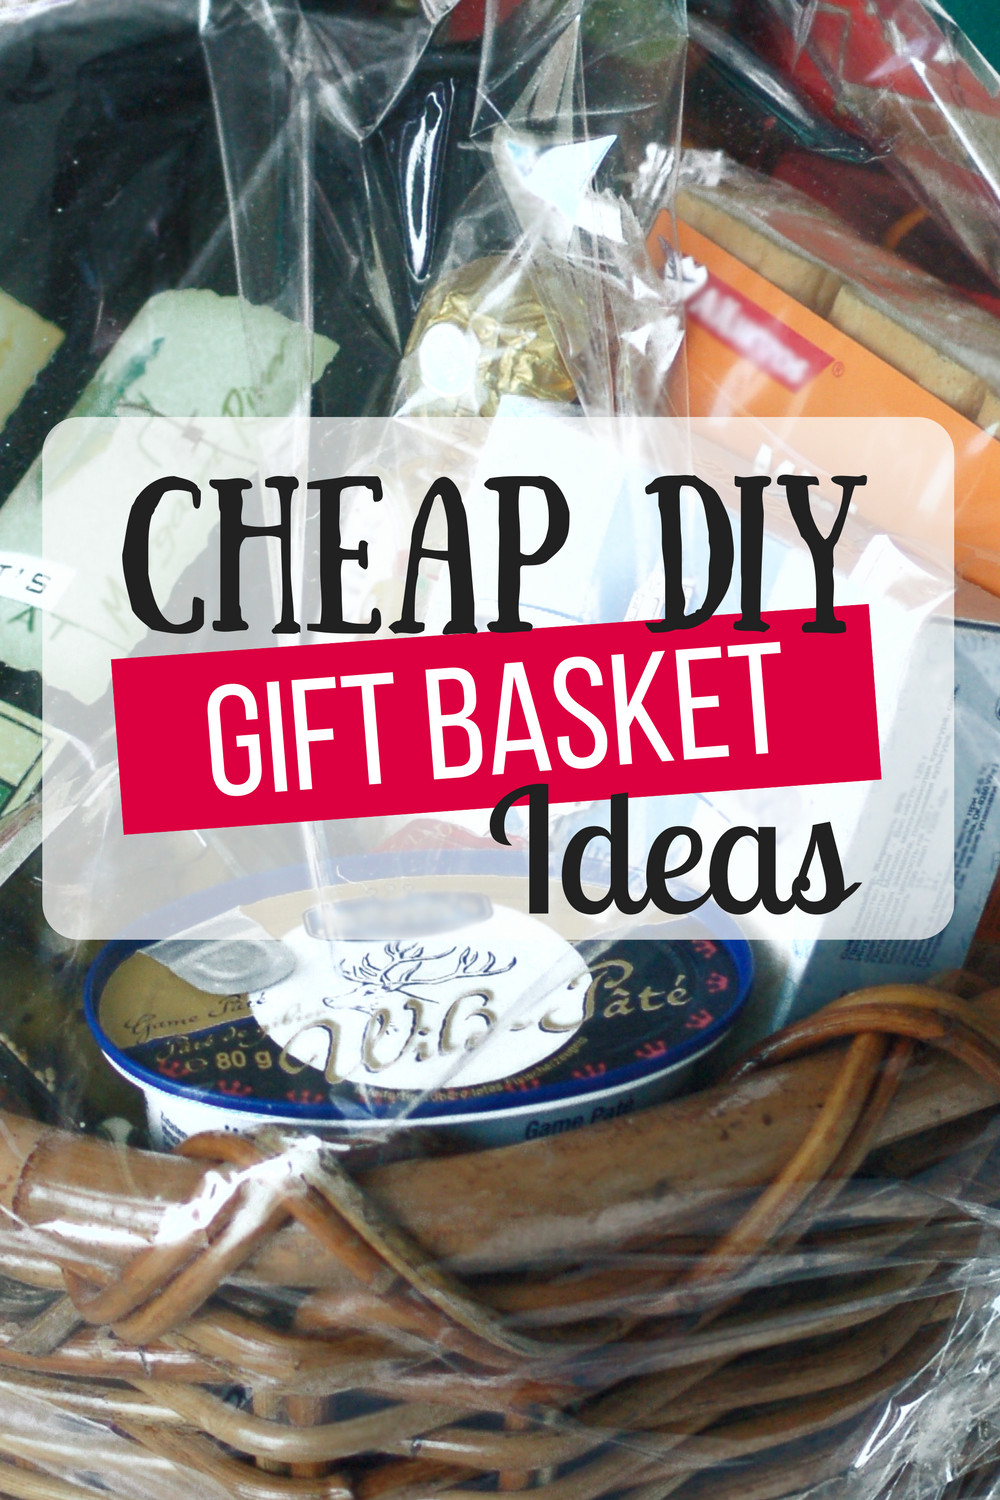 Food Gift Basket Ideas Diy
 Cheap DIY Gift Baskets The Busy Bud er